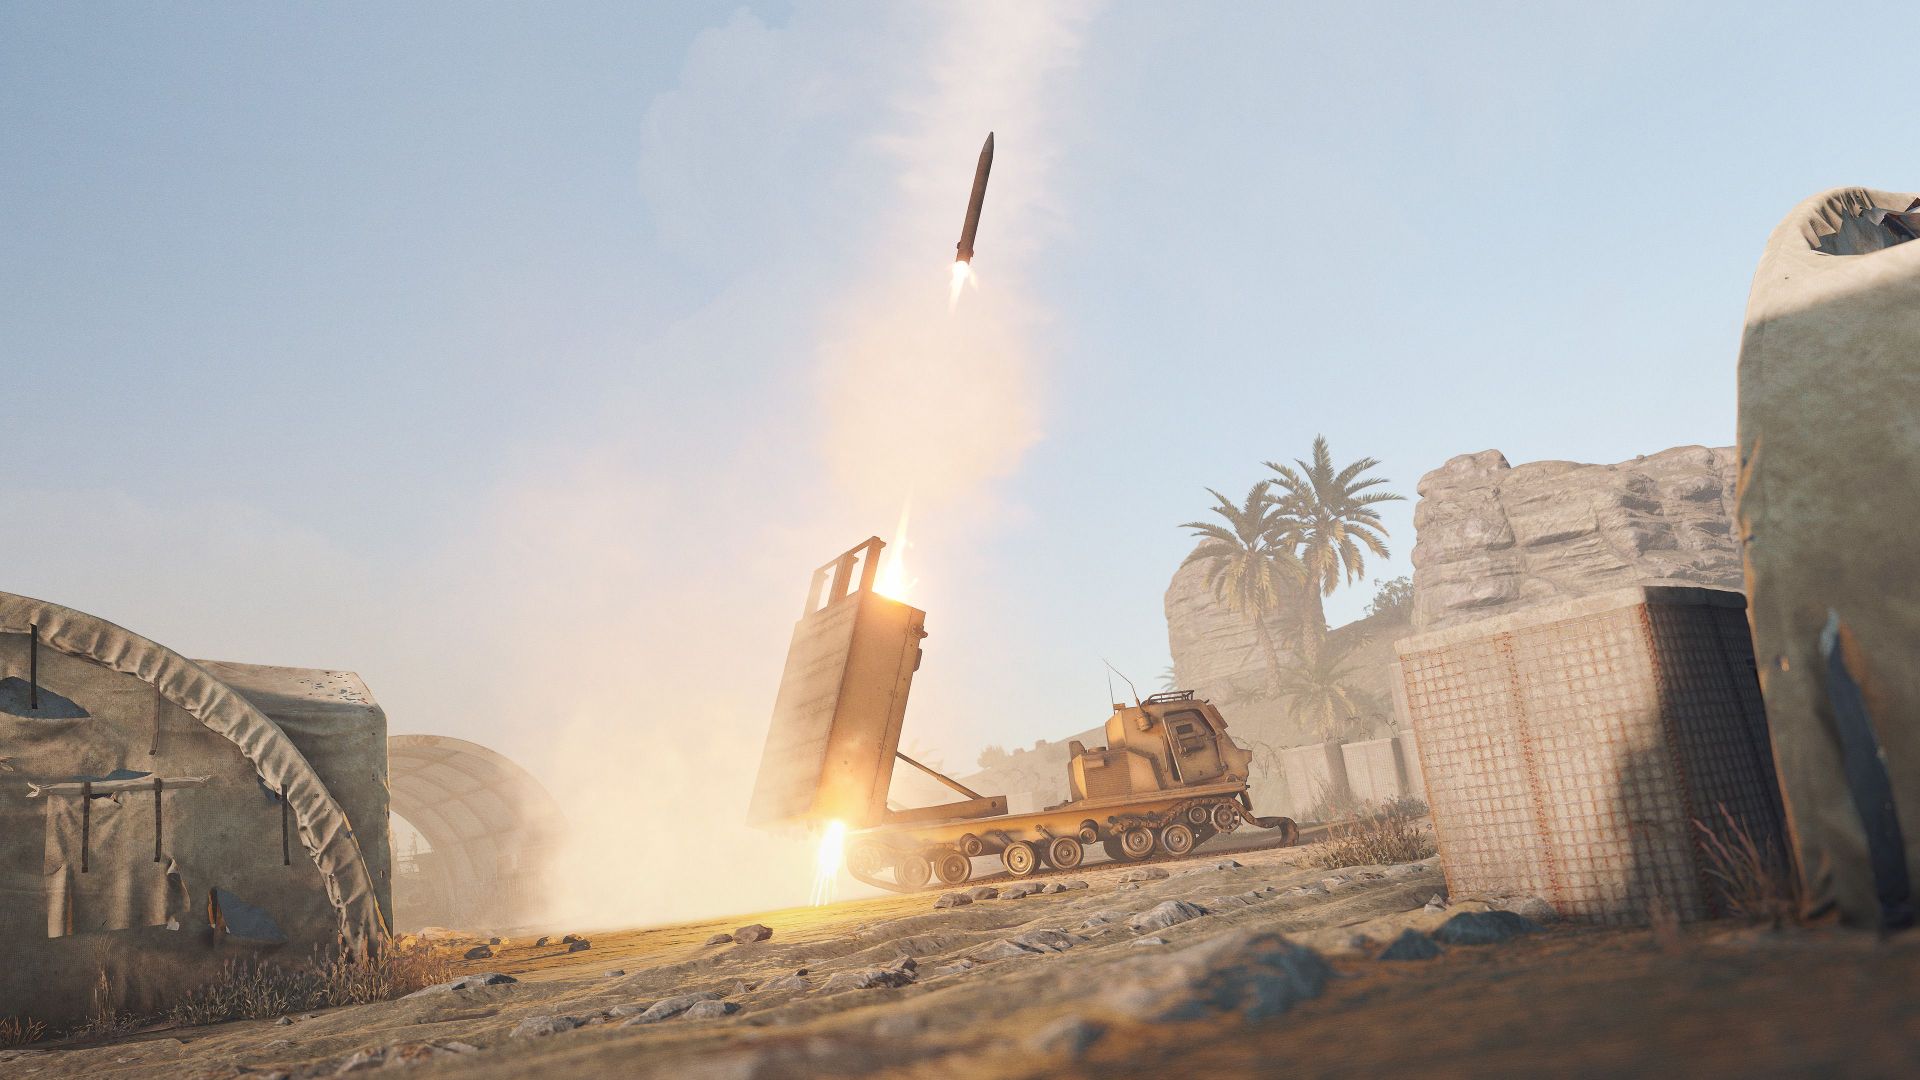 Rust’s November update brings desert bases and new rocket launching